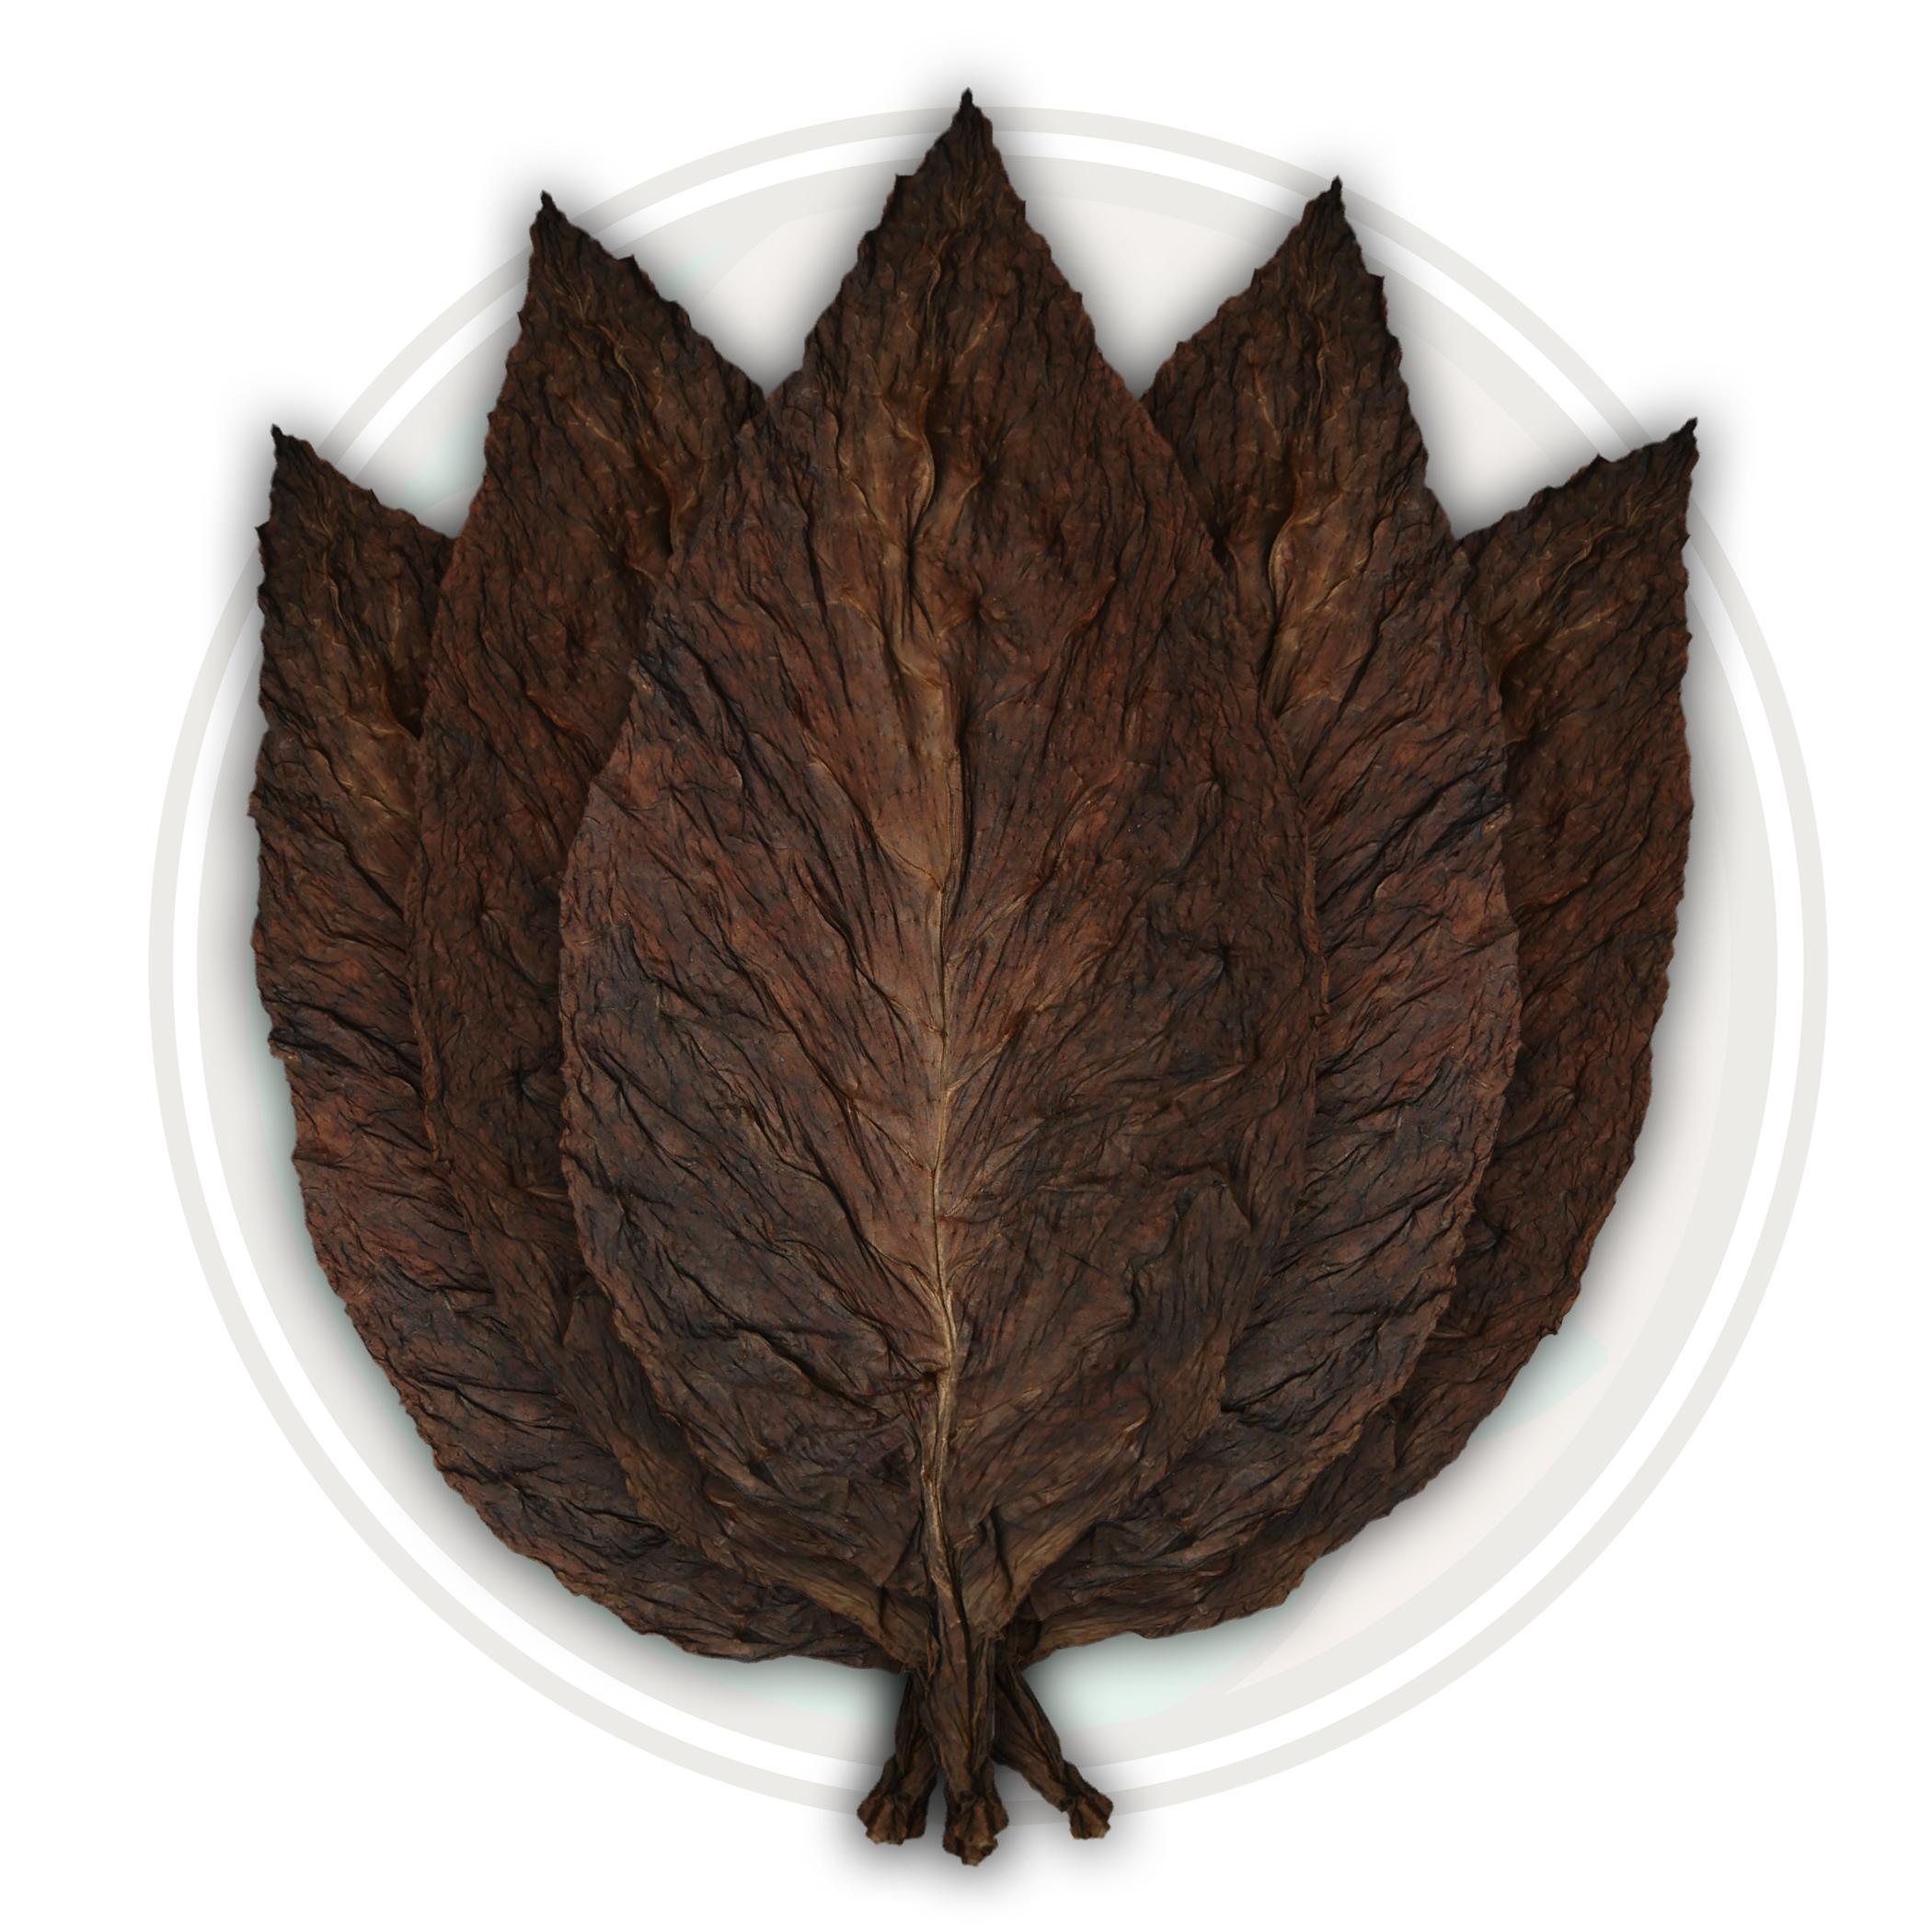 Grabba leaves (1 lb) special - $65.00 (RED HERRI